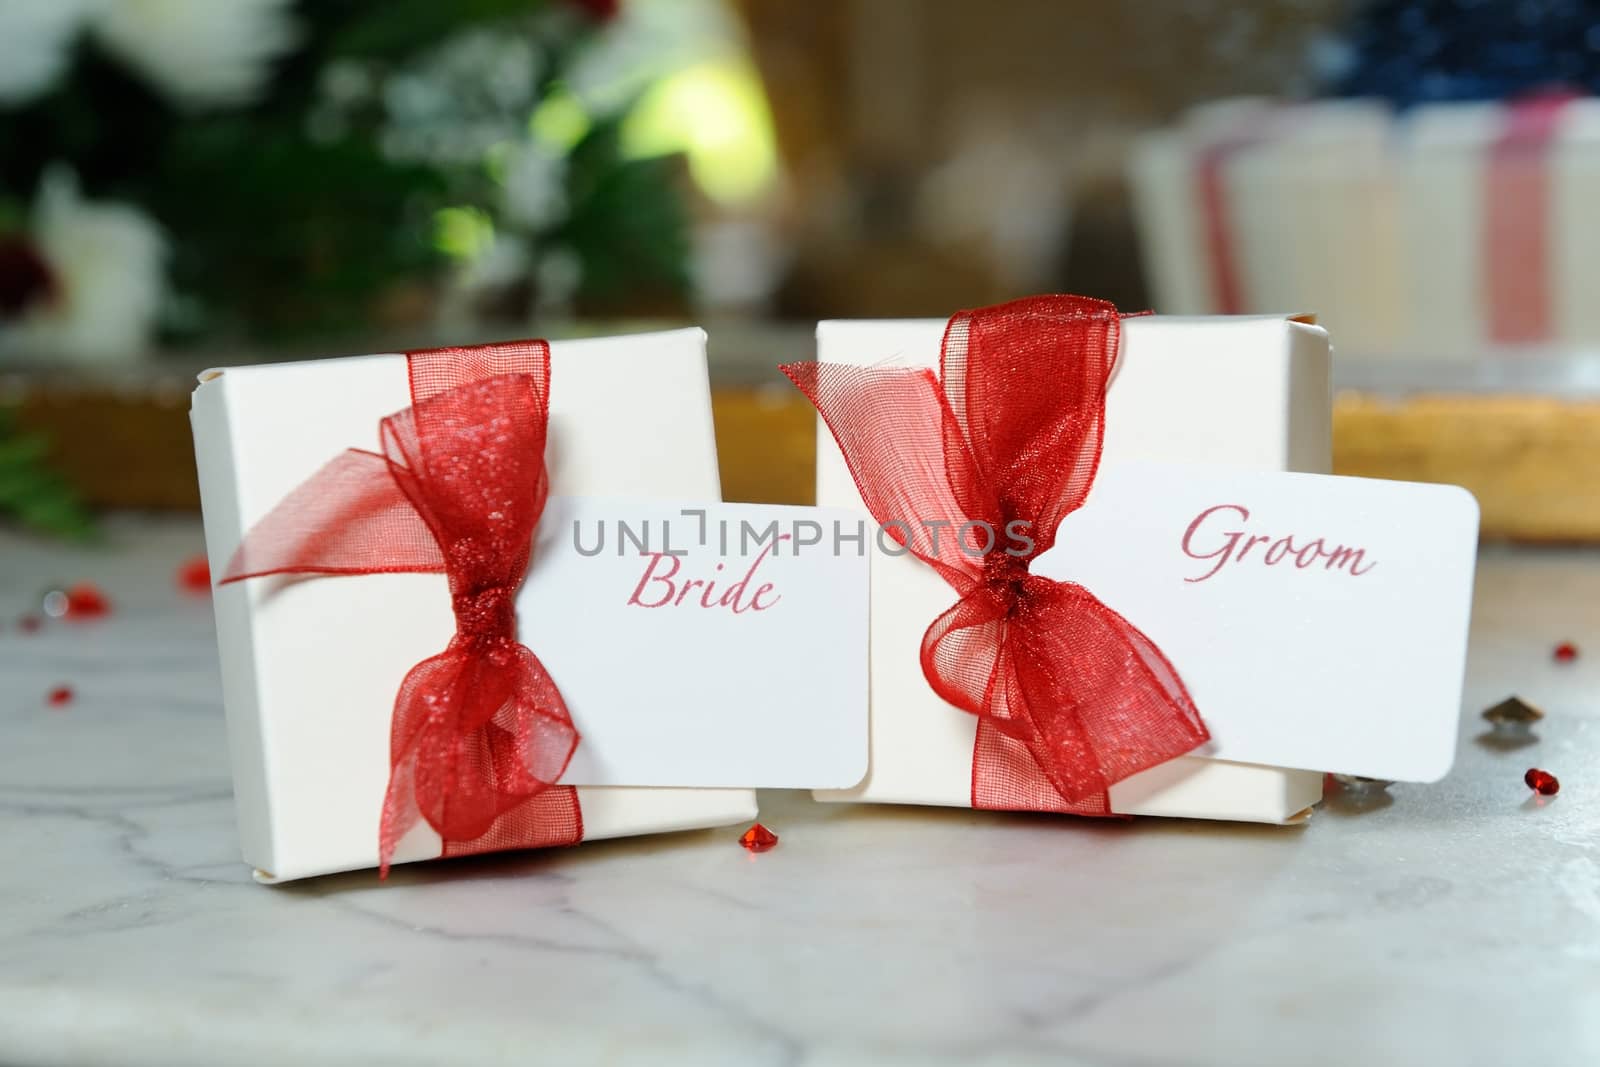 Bride and groom decorative boxes at wedding reception